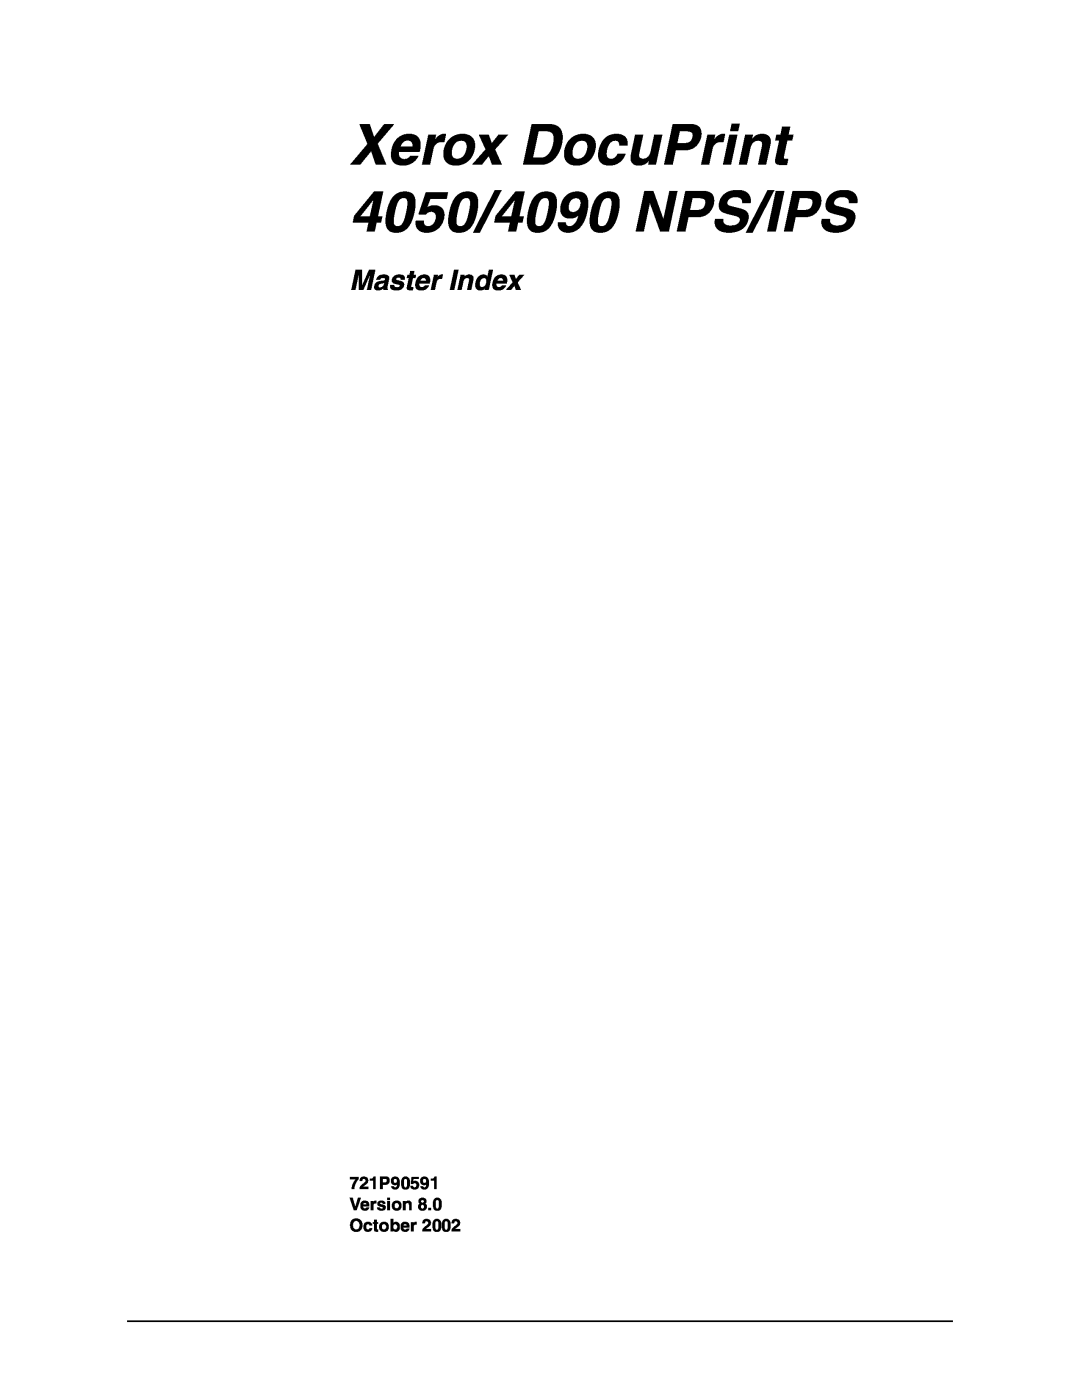 Xerox 4050/4090 NPS/NPS manual Xerox DocuPrint 4050/4090 NPS/IPS, Master Index, 721P90591 Version 8.0 October 